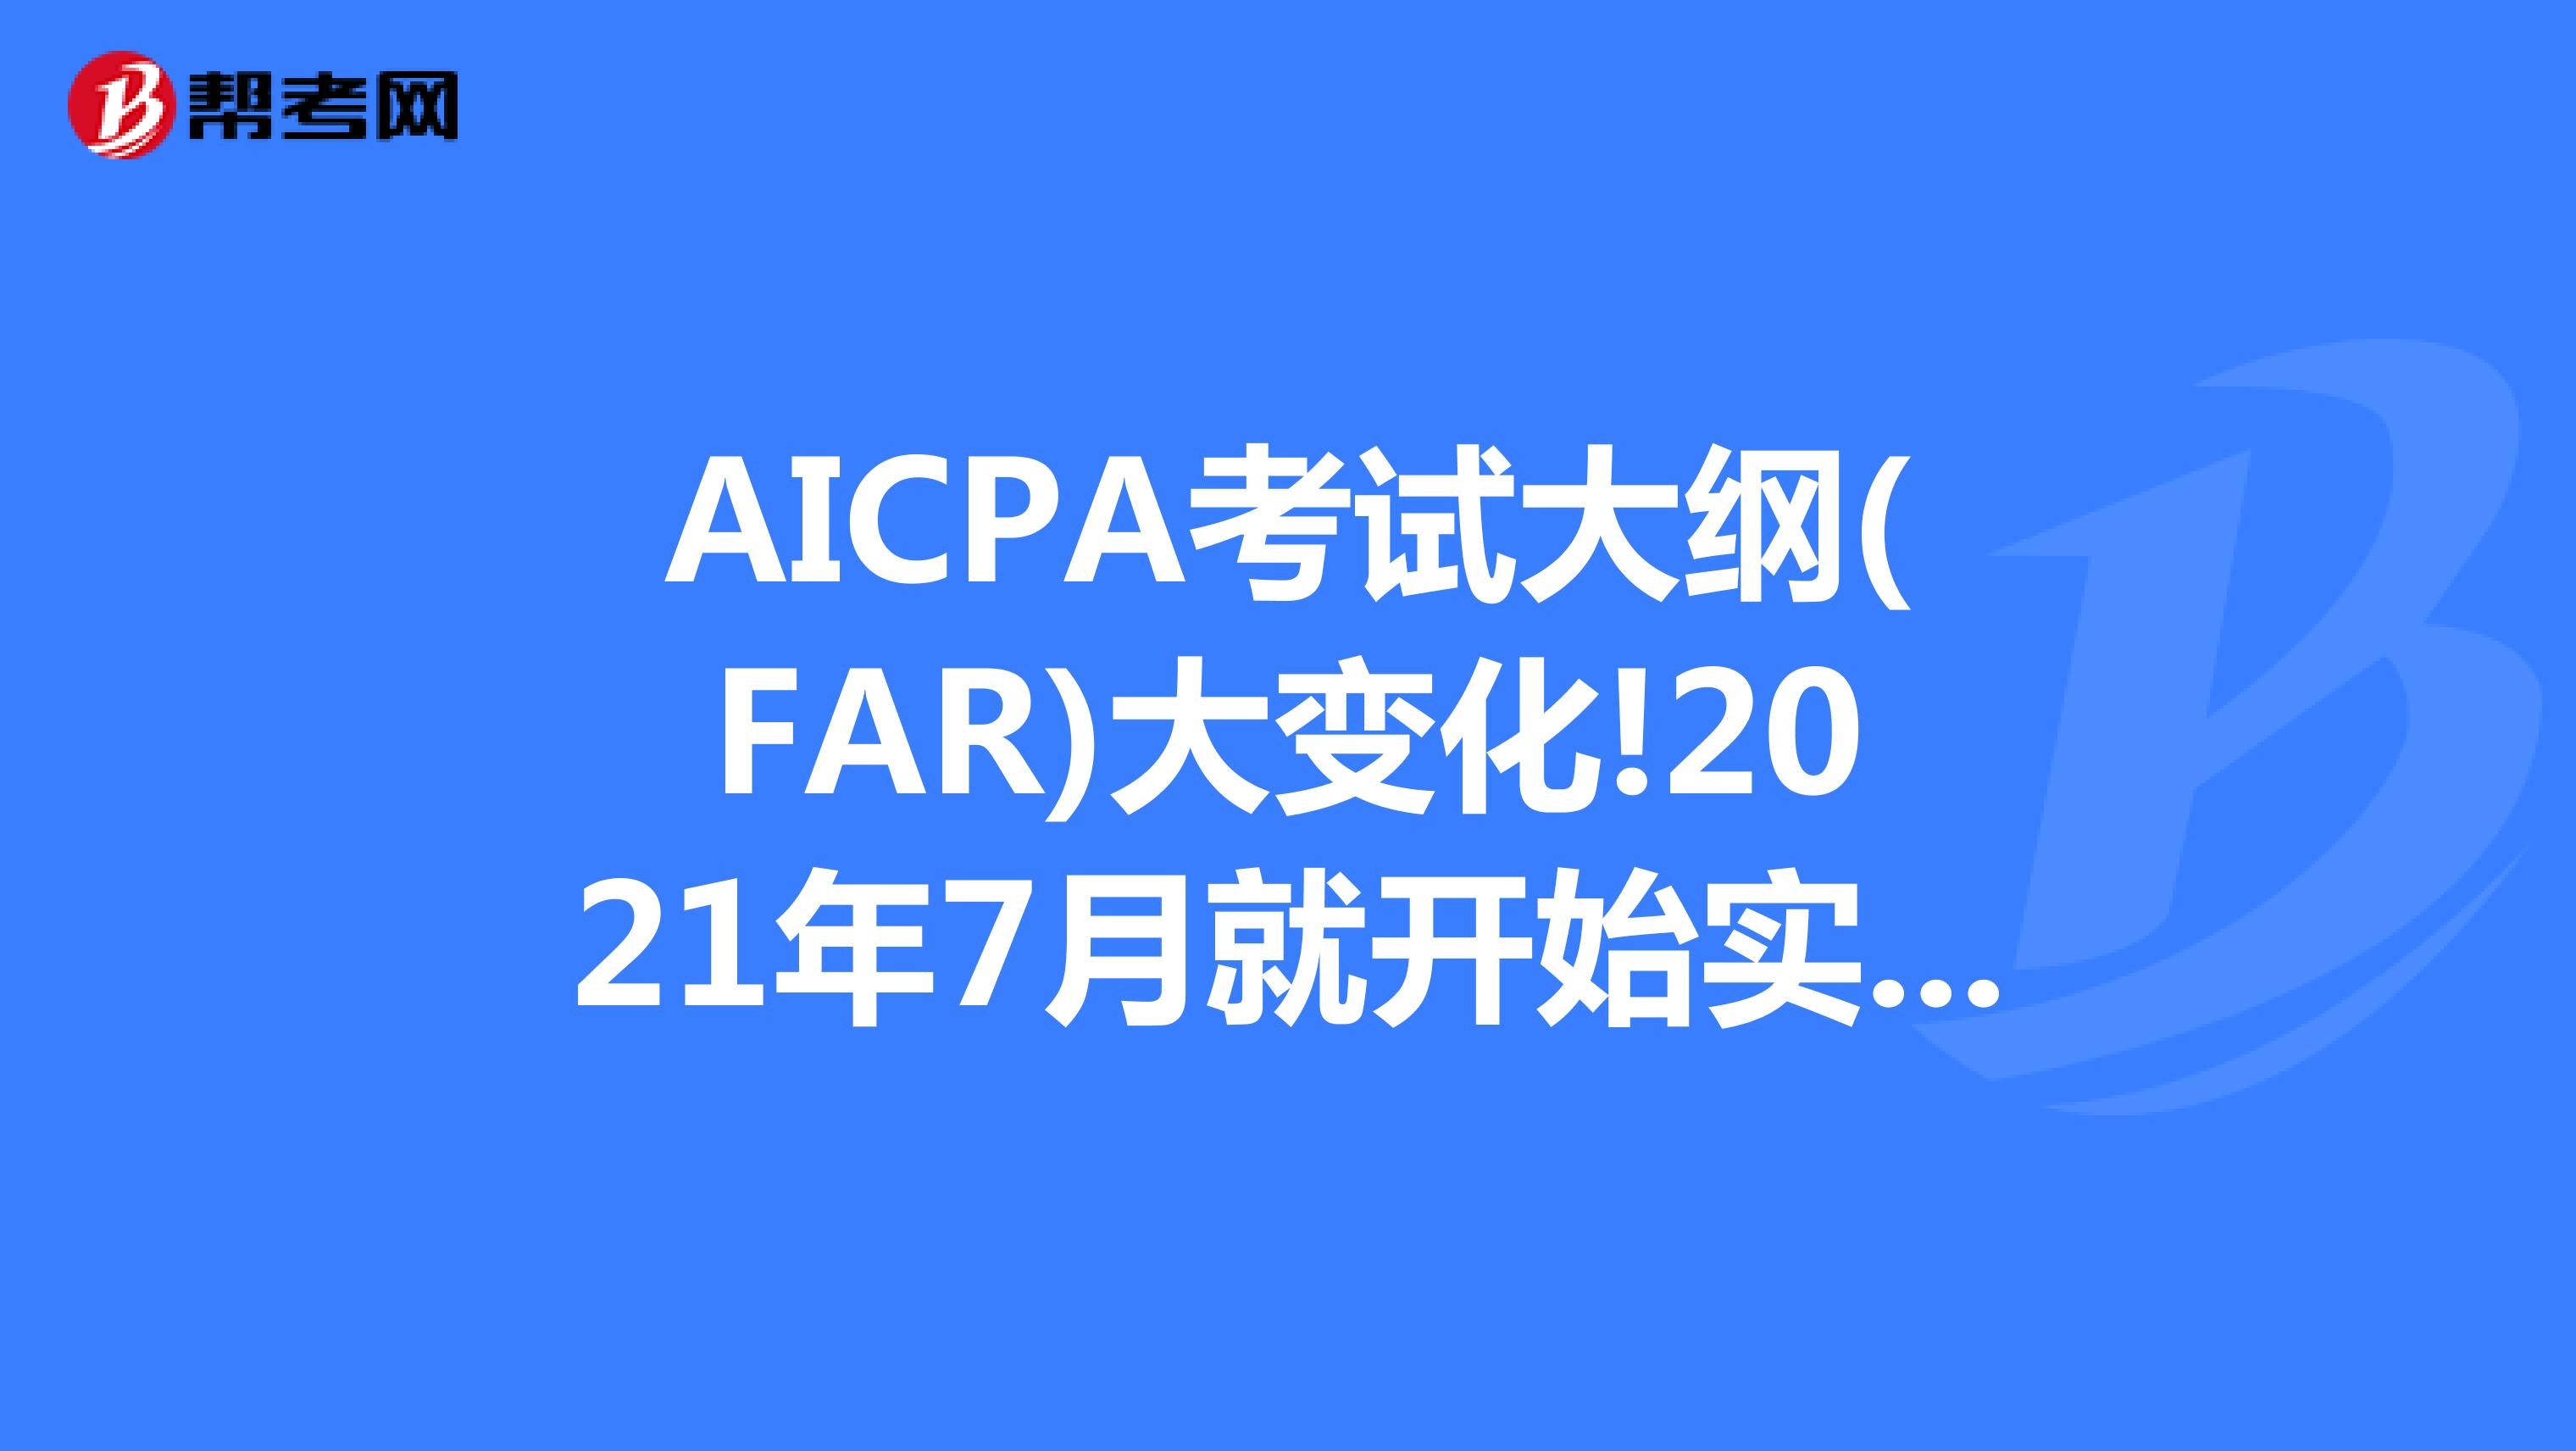 AICPA考试大纲(FAR)大变化!2021年7月就开始实行!